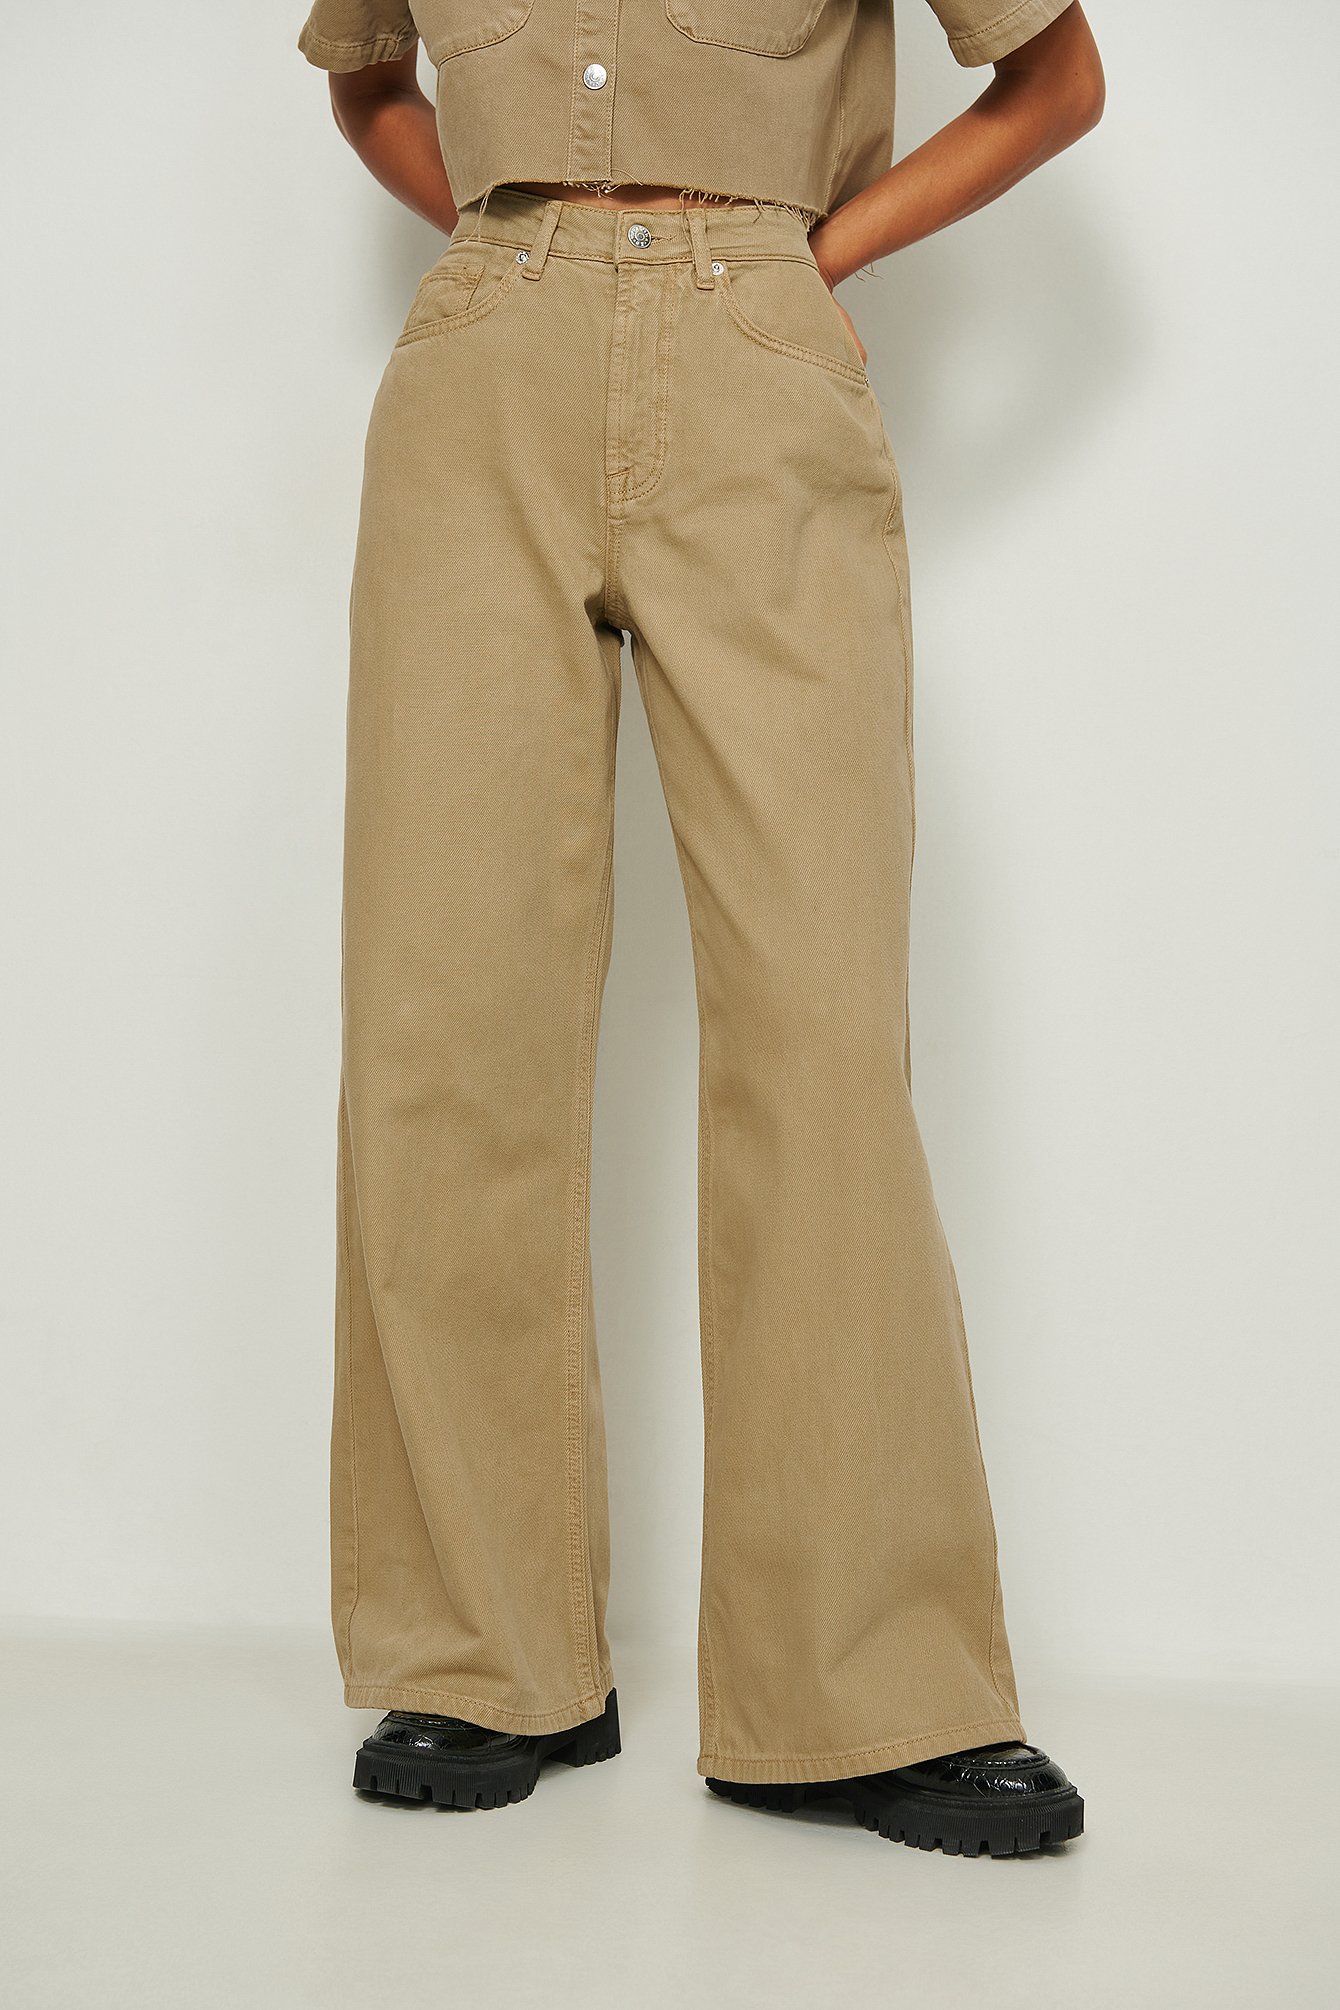 Khaki Colored Soft Rigid Wide Jeans